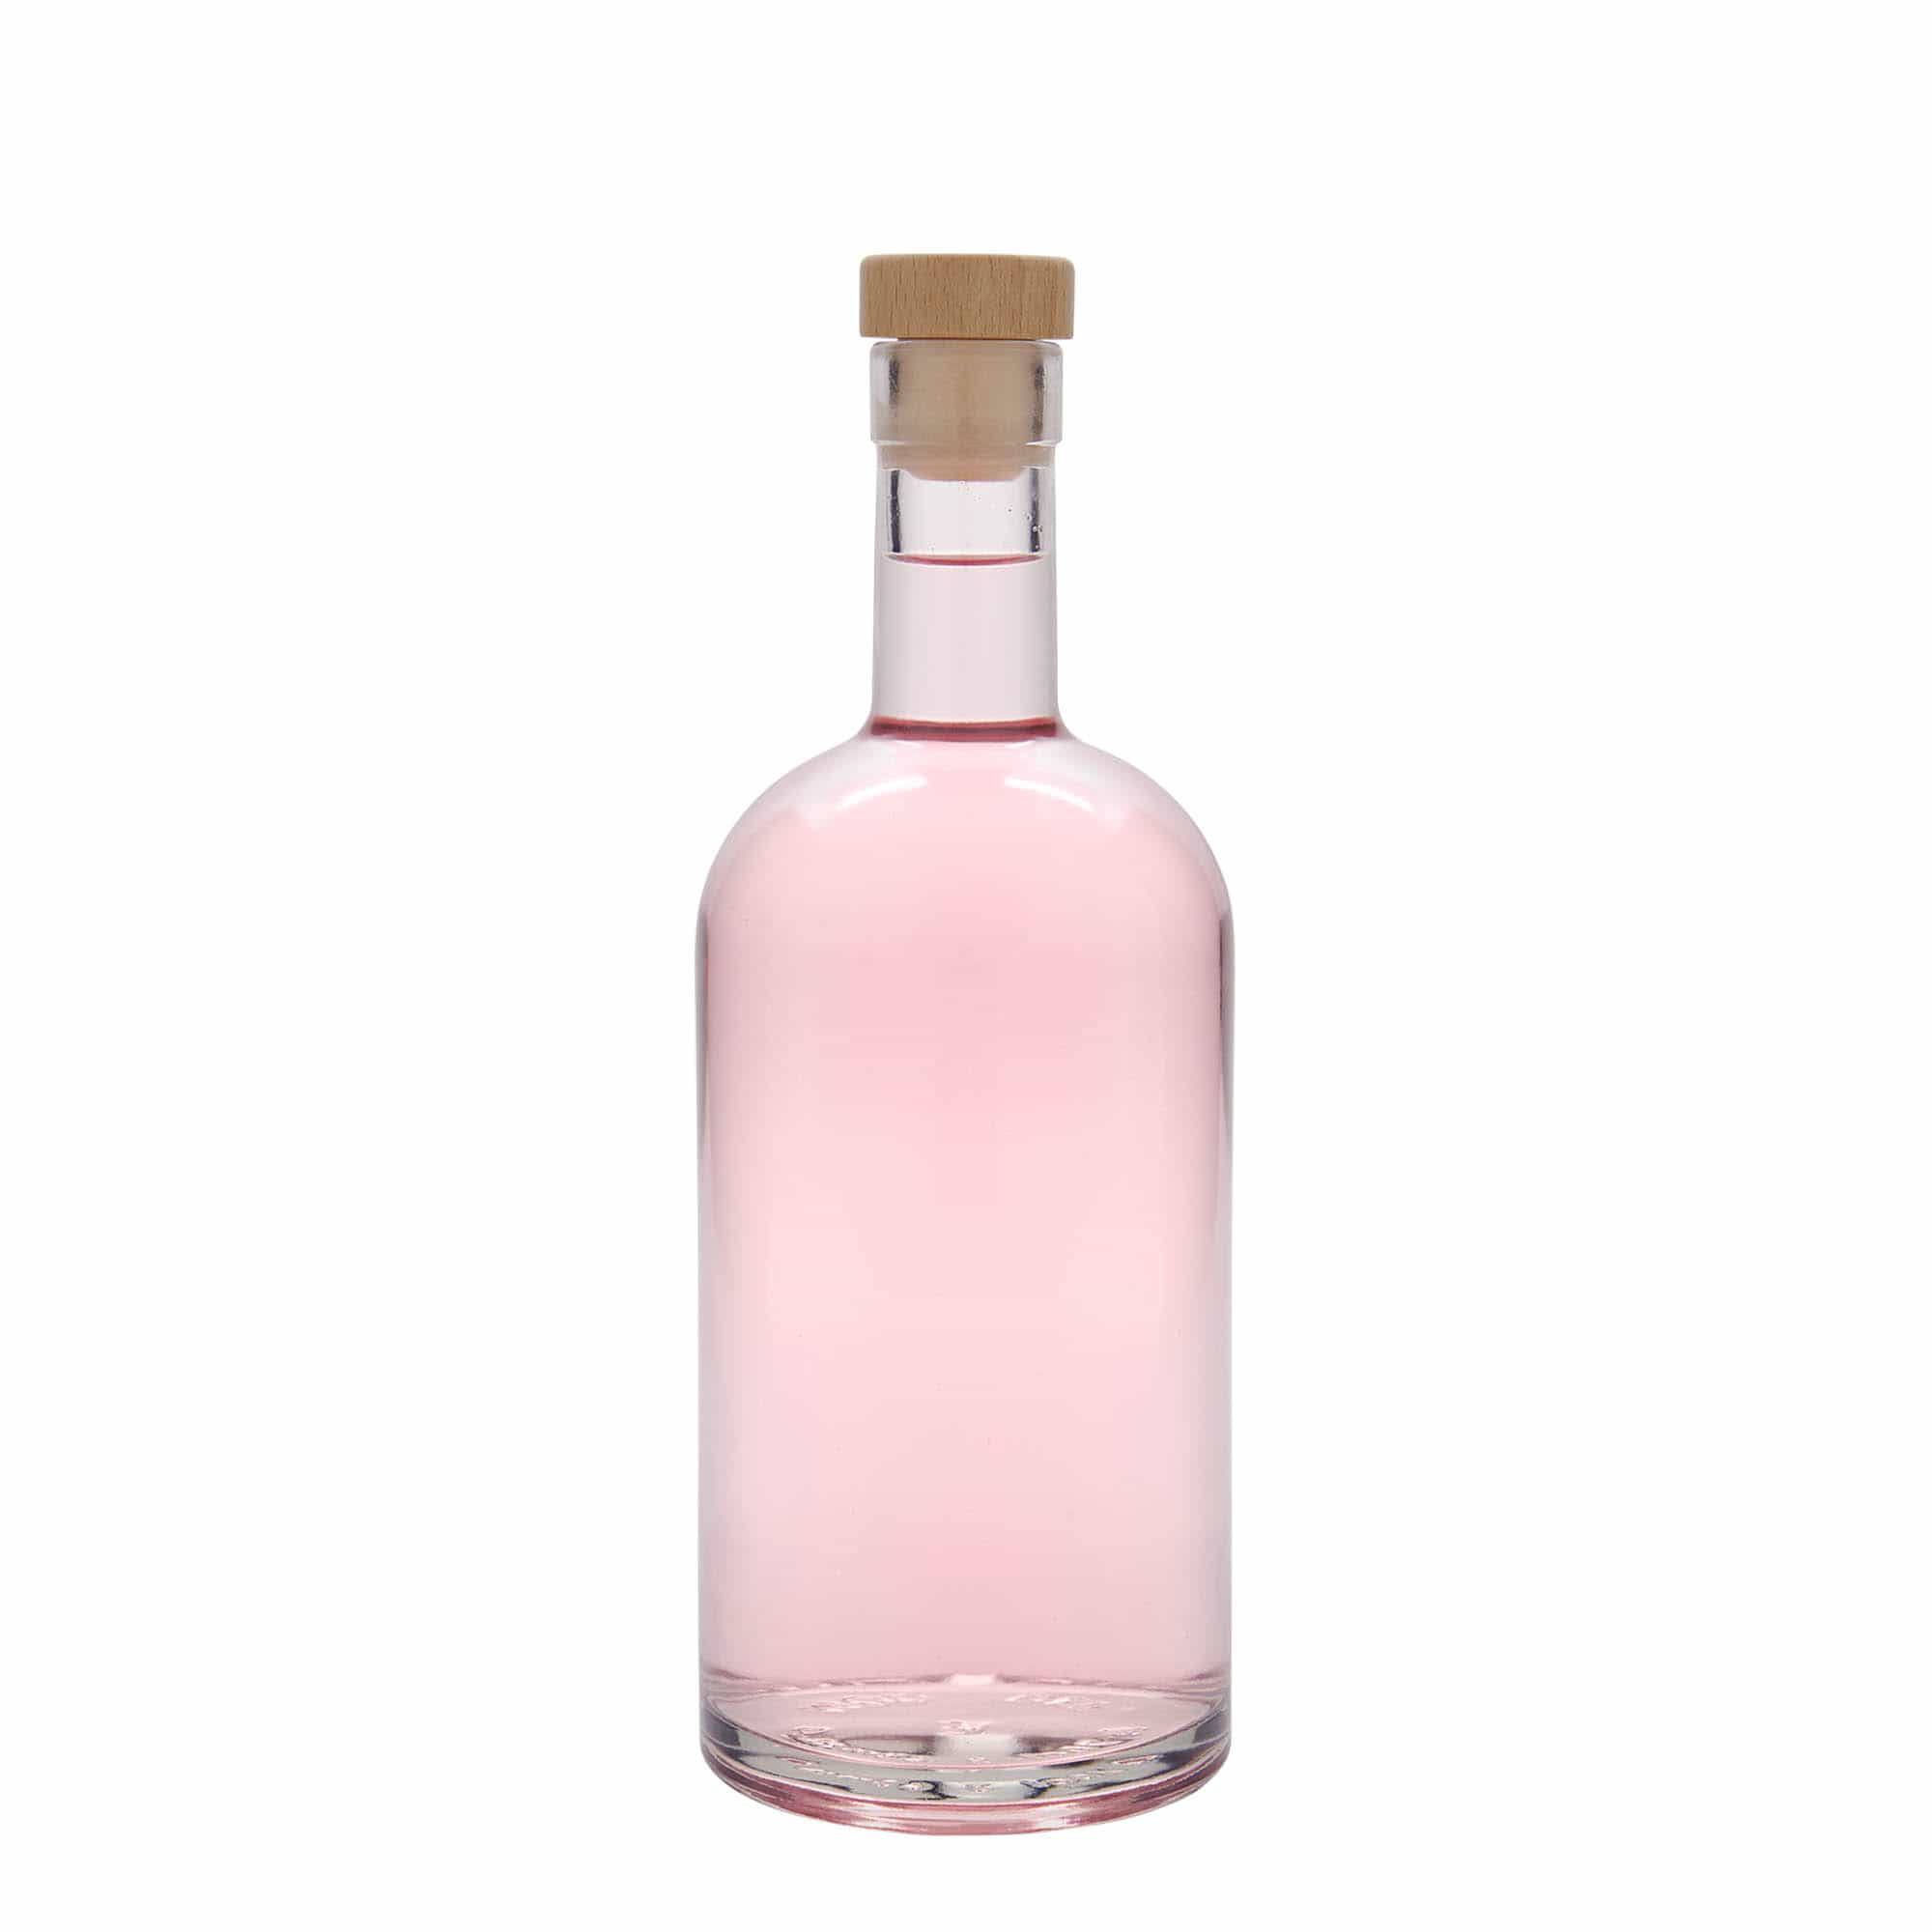 700 ml glass bottle 'Franco', closure: cork